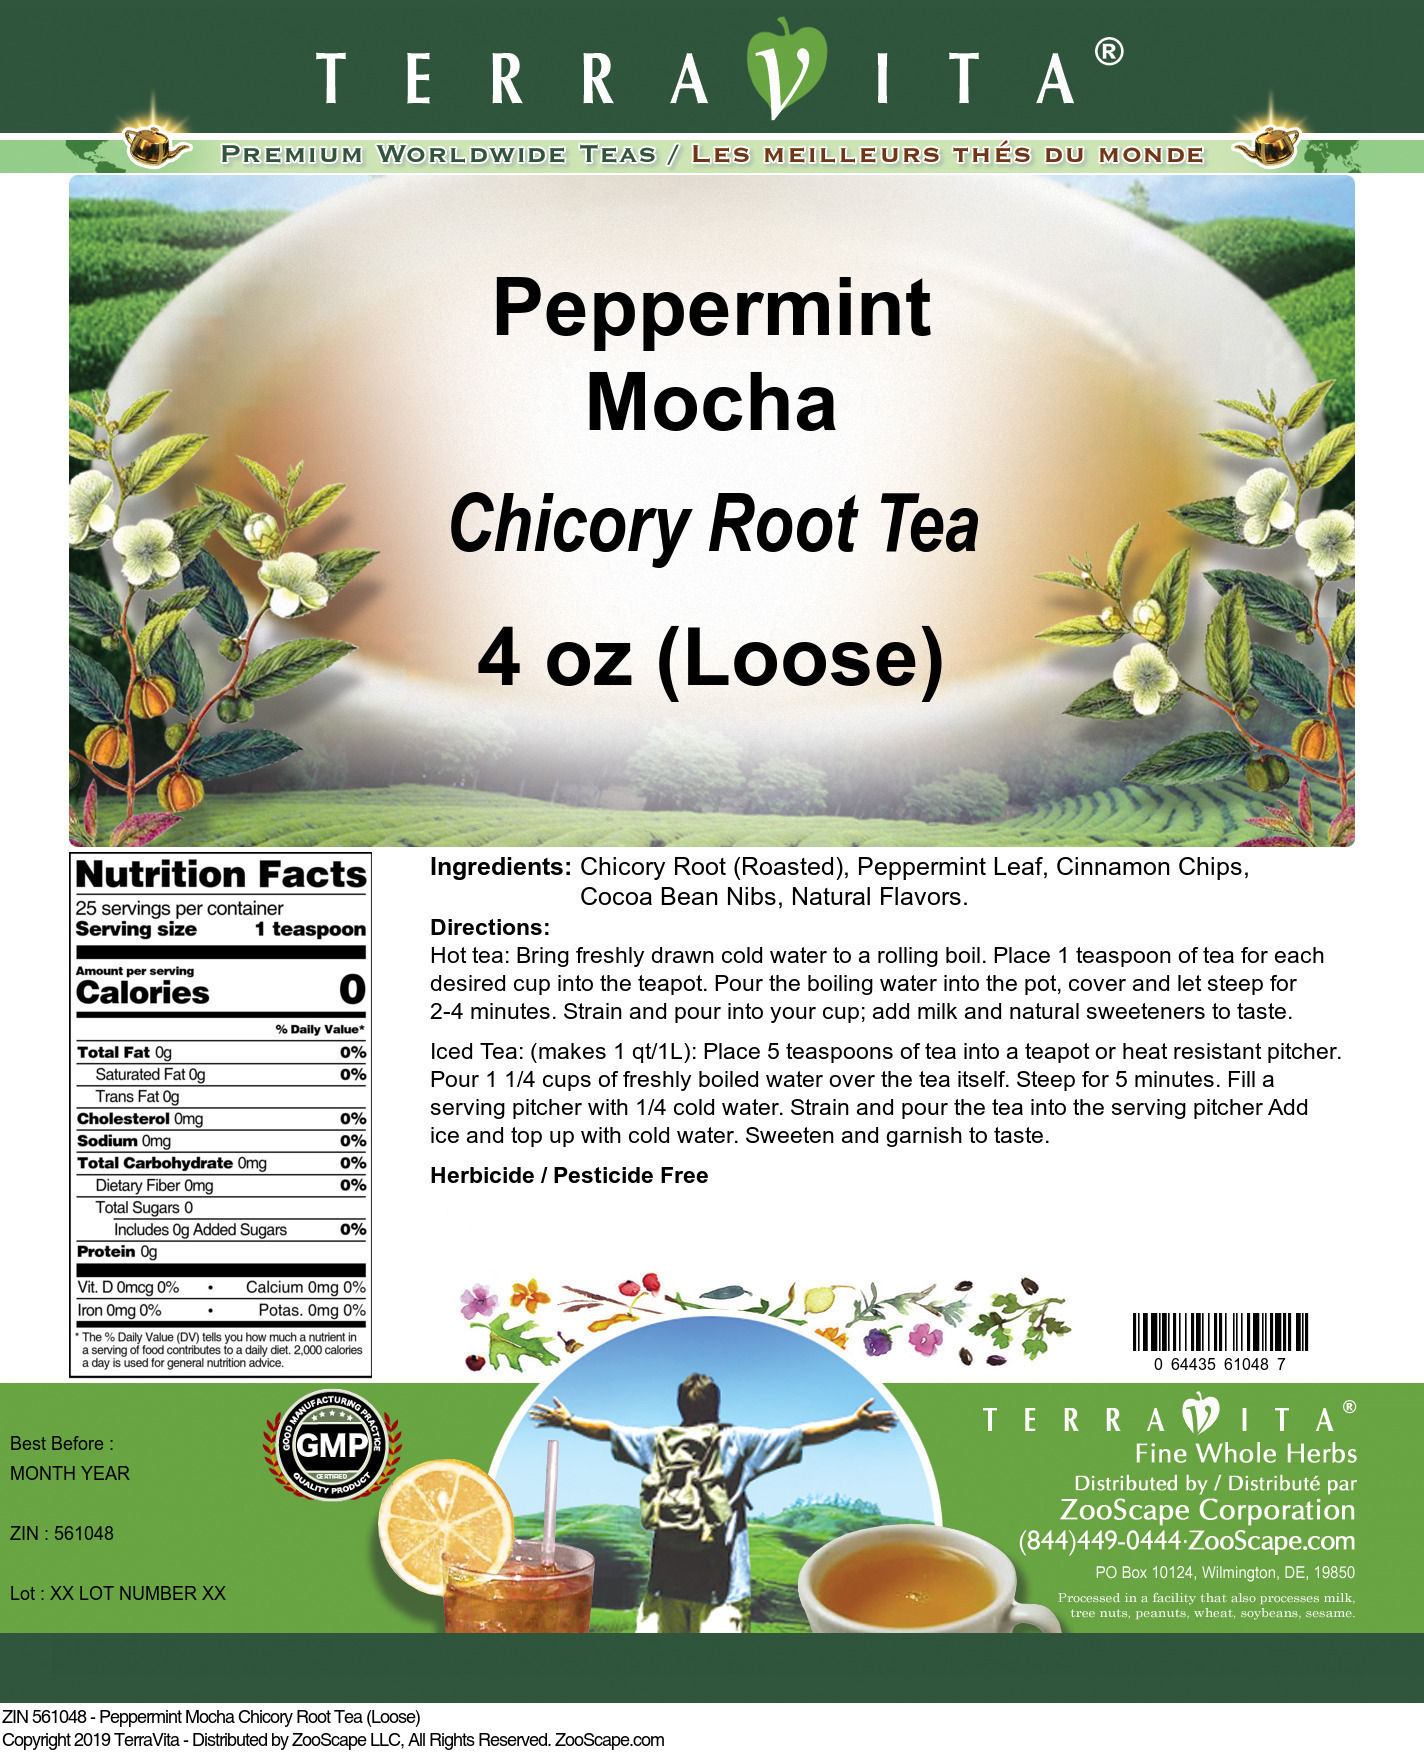 Peppermint Mocha Chicory Root Tea (Loose) - Label